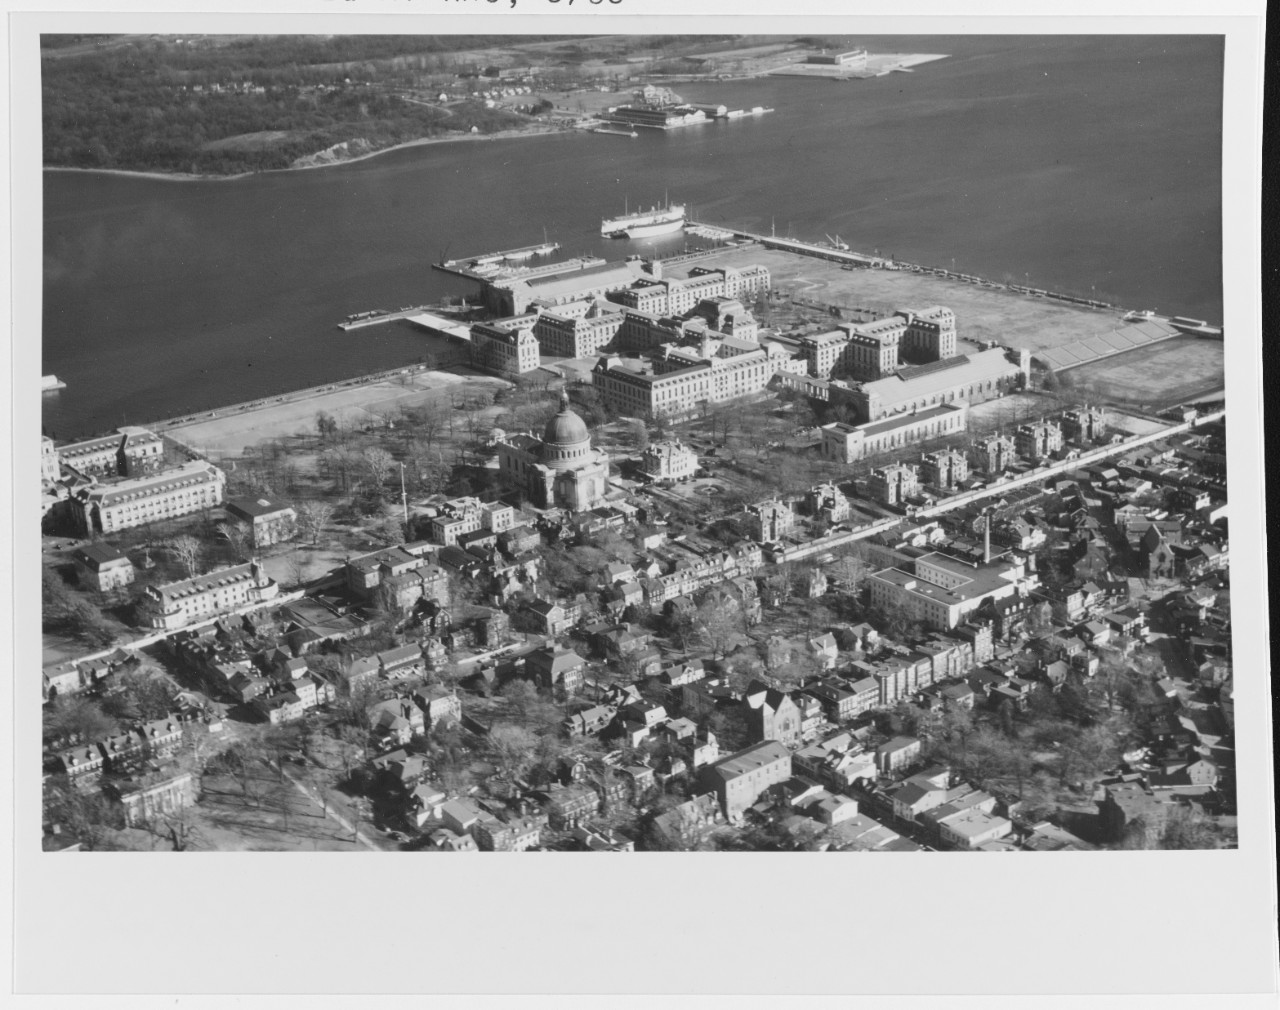 U.S. Naval Academy, Annapolis, Maryland